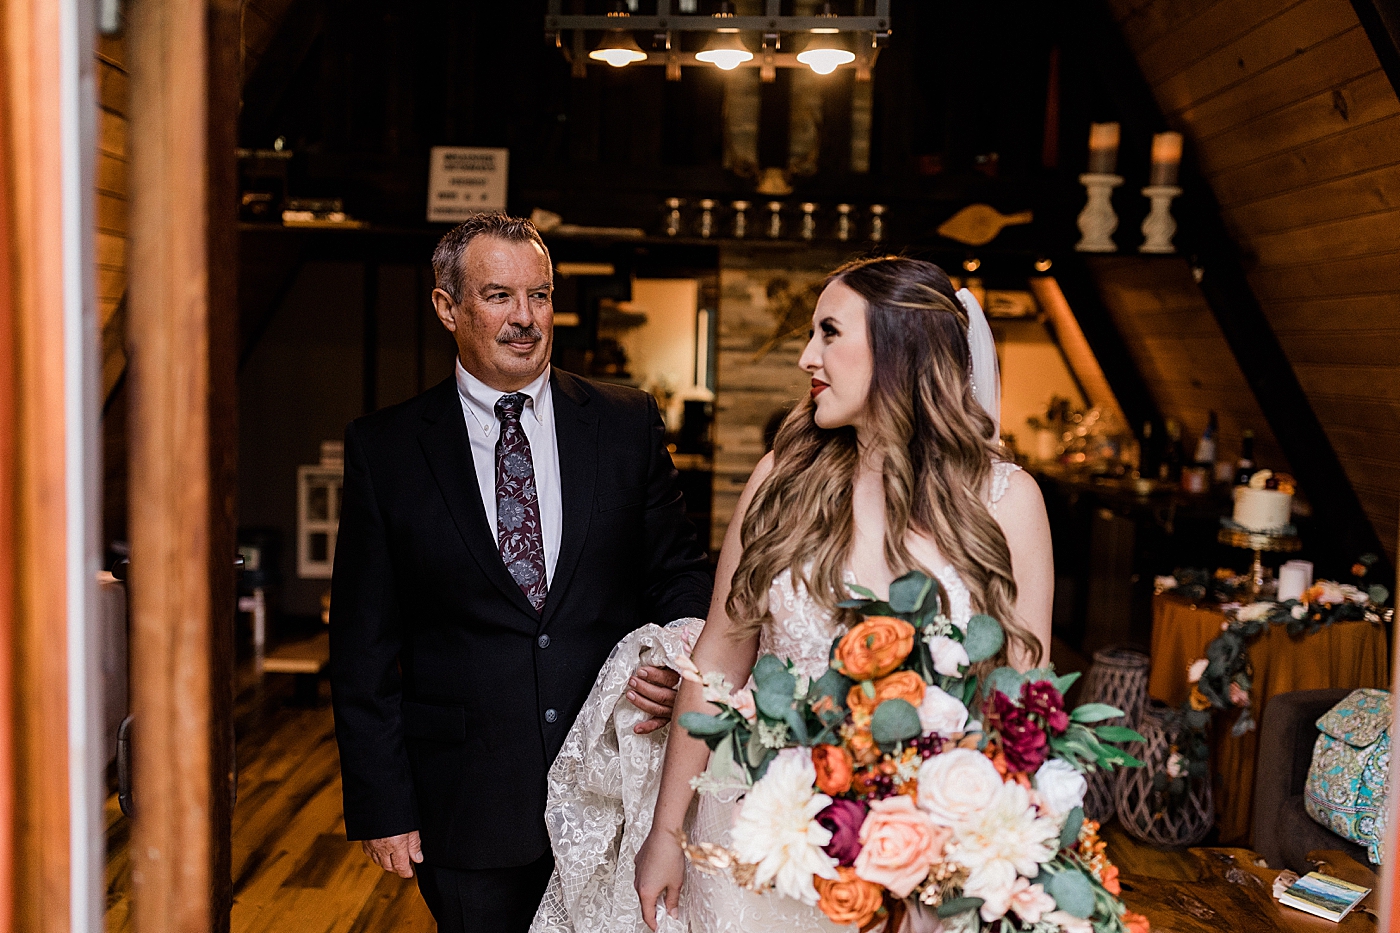 First look between bride and her dad | Megan Montalvo Photography